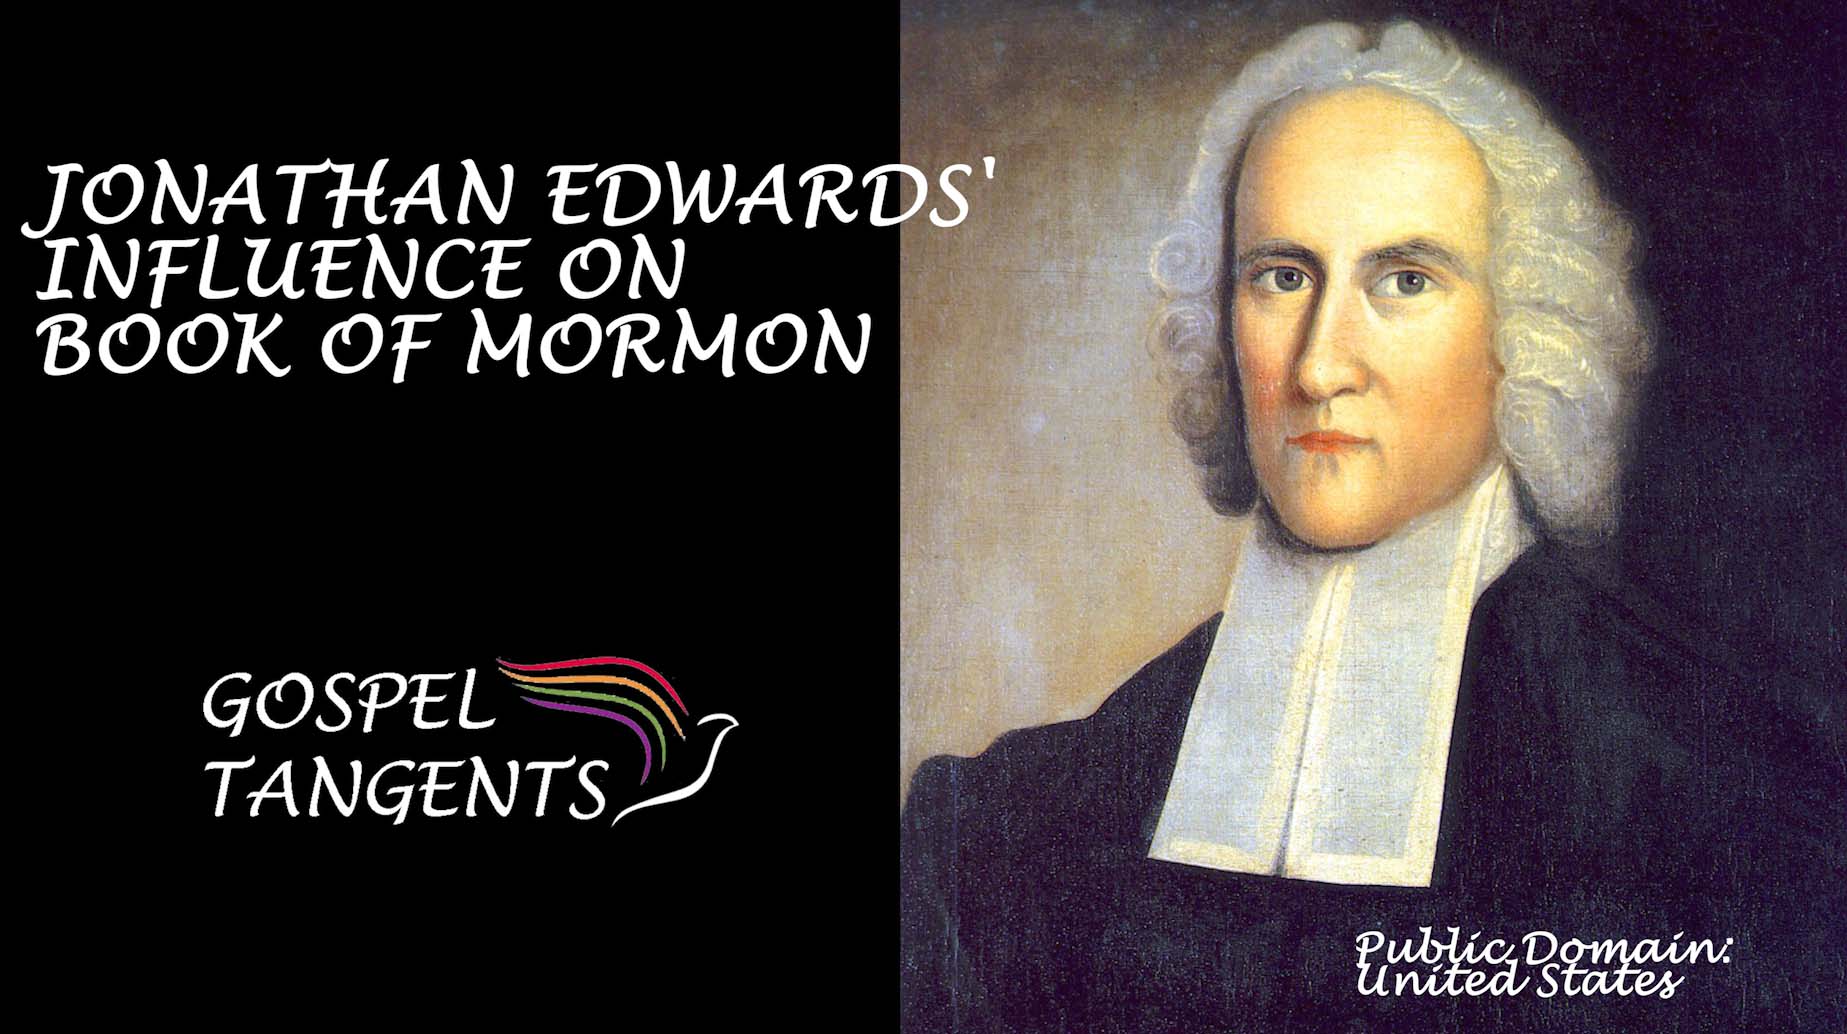 jonathan edwards - Jonathan Edwards’ Influence on Book of Mormon (Part 10 of 11) - Mormon History Podcast